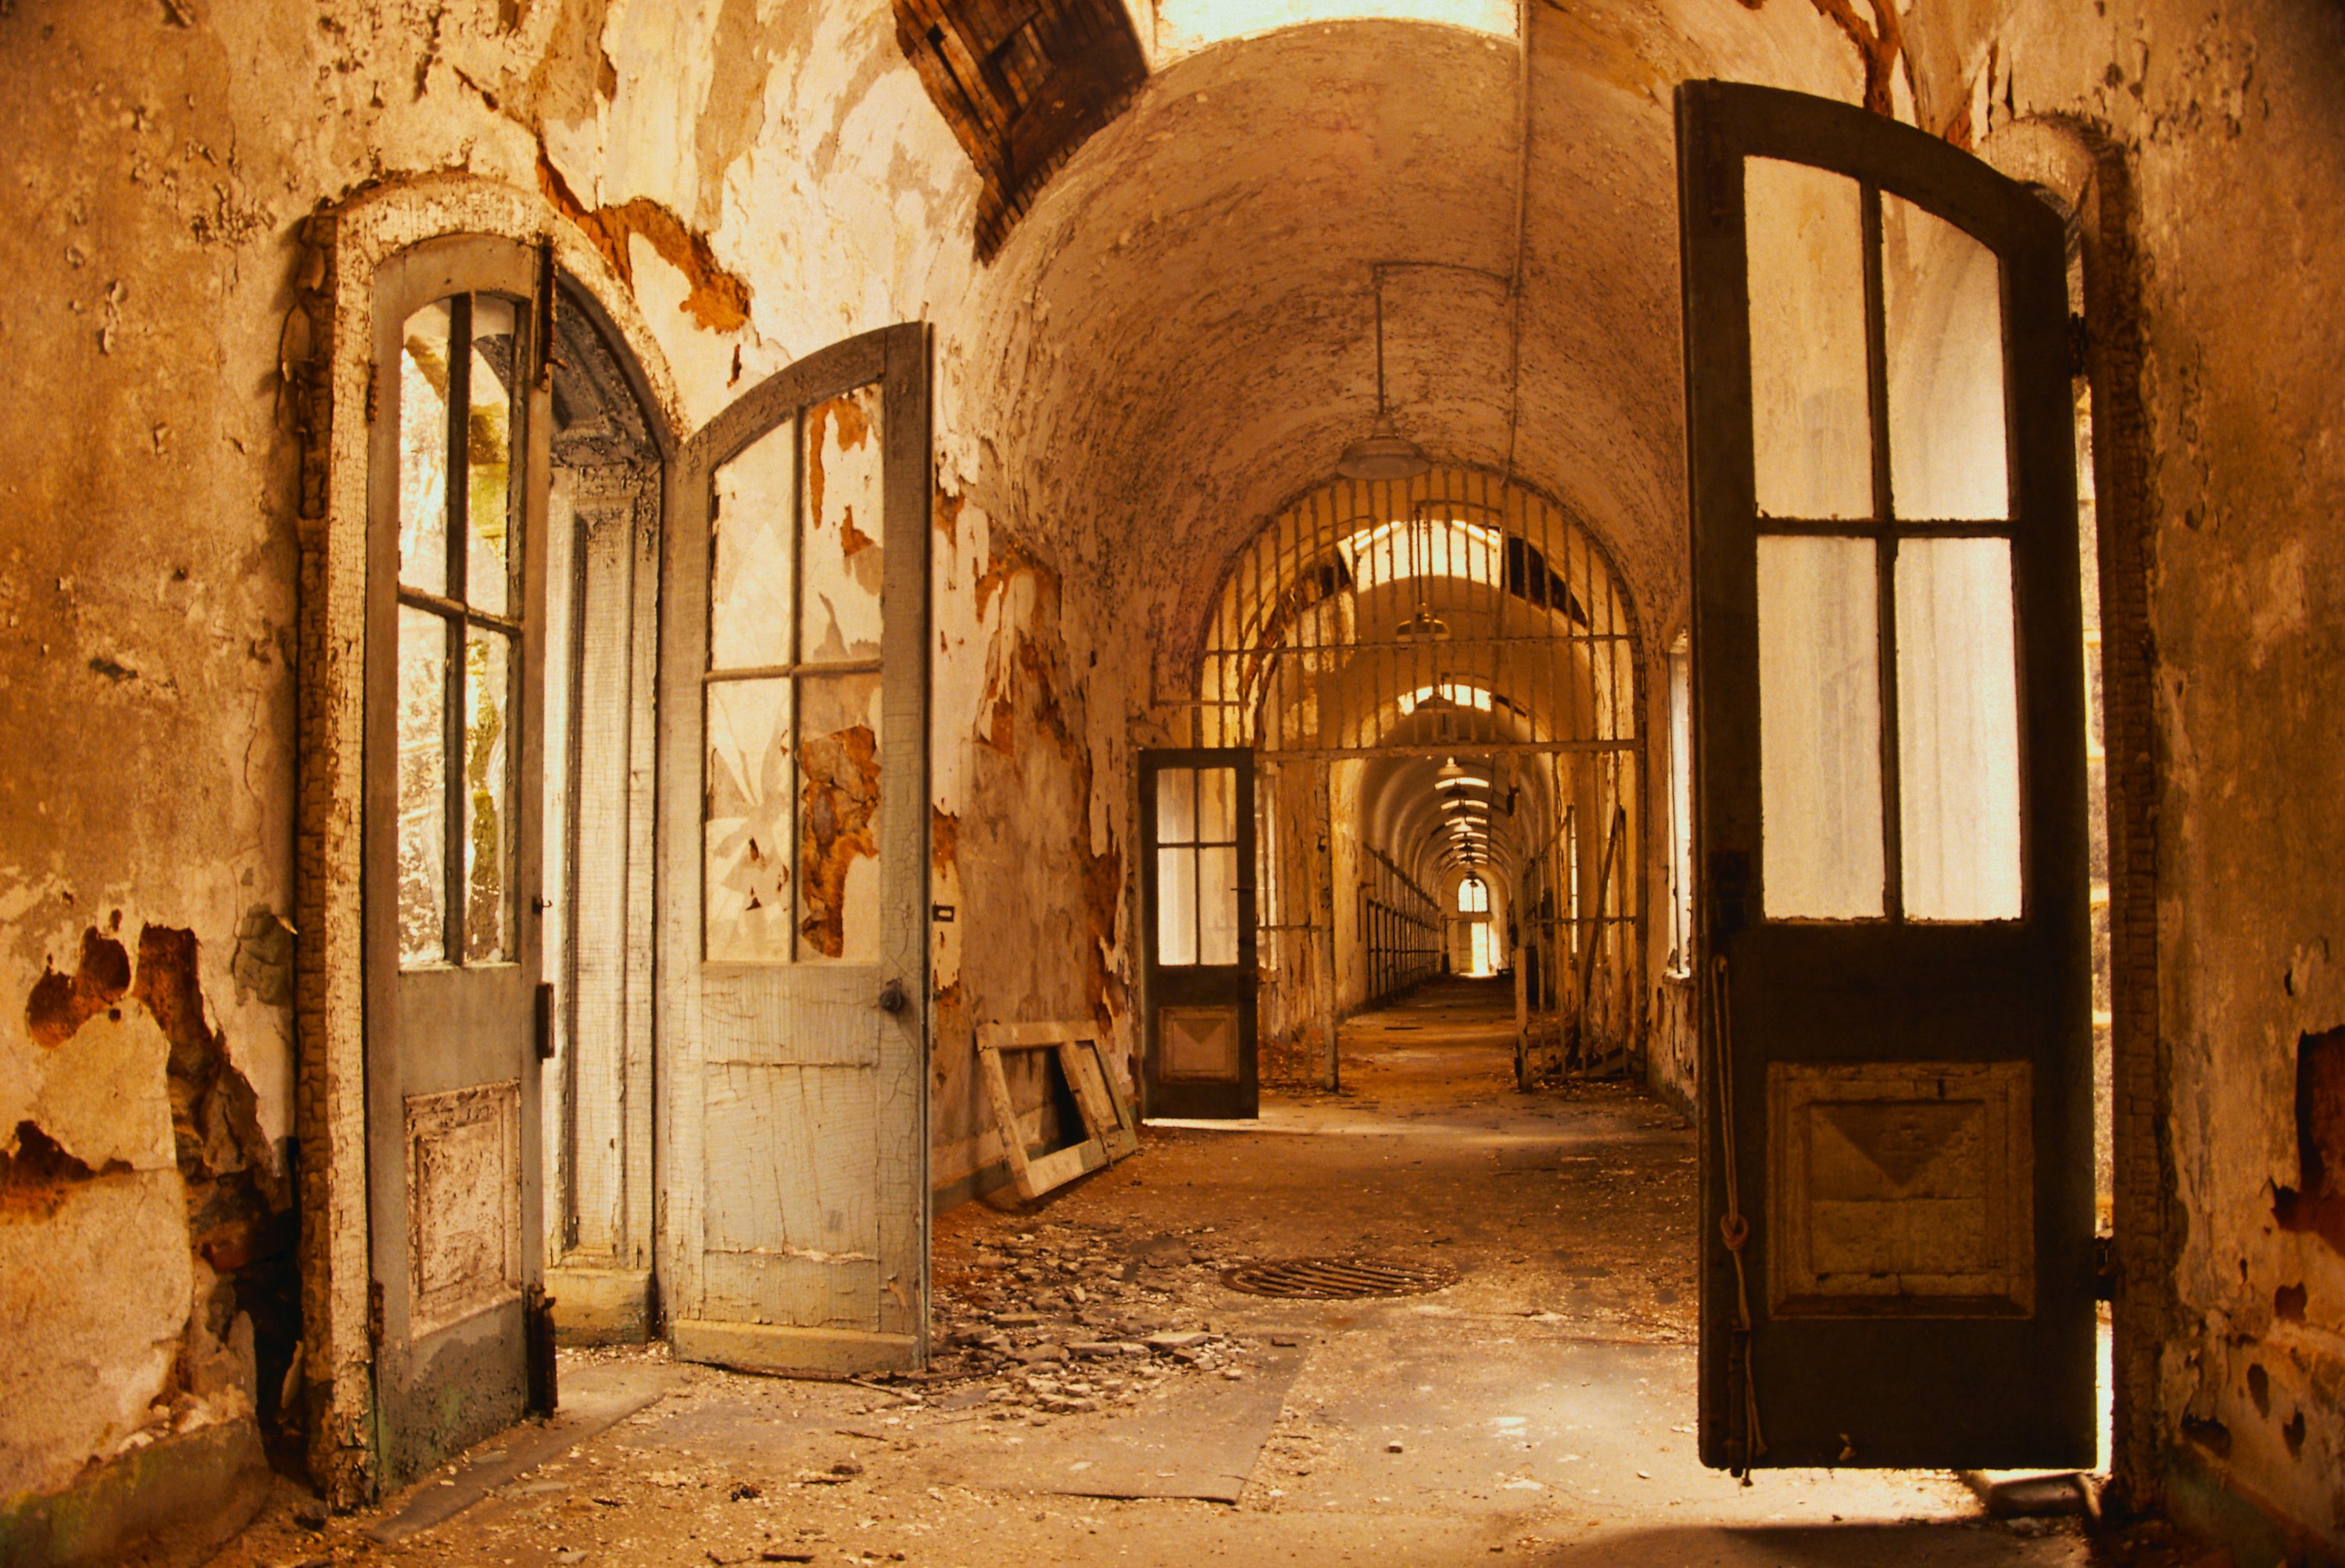 Abandoned Hospital Prisons Apocalyptic Asylum Interior Hallway Brown Arch Door 3000x2006